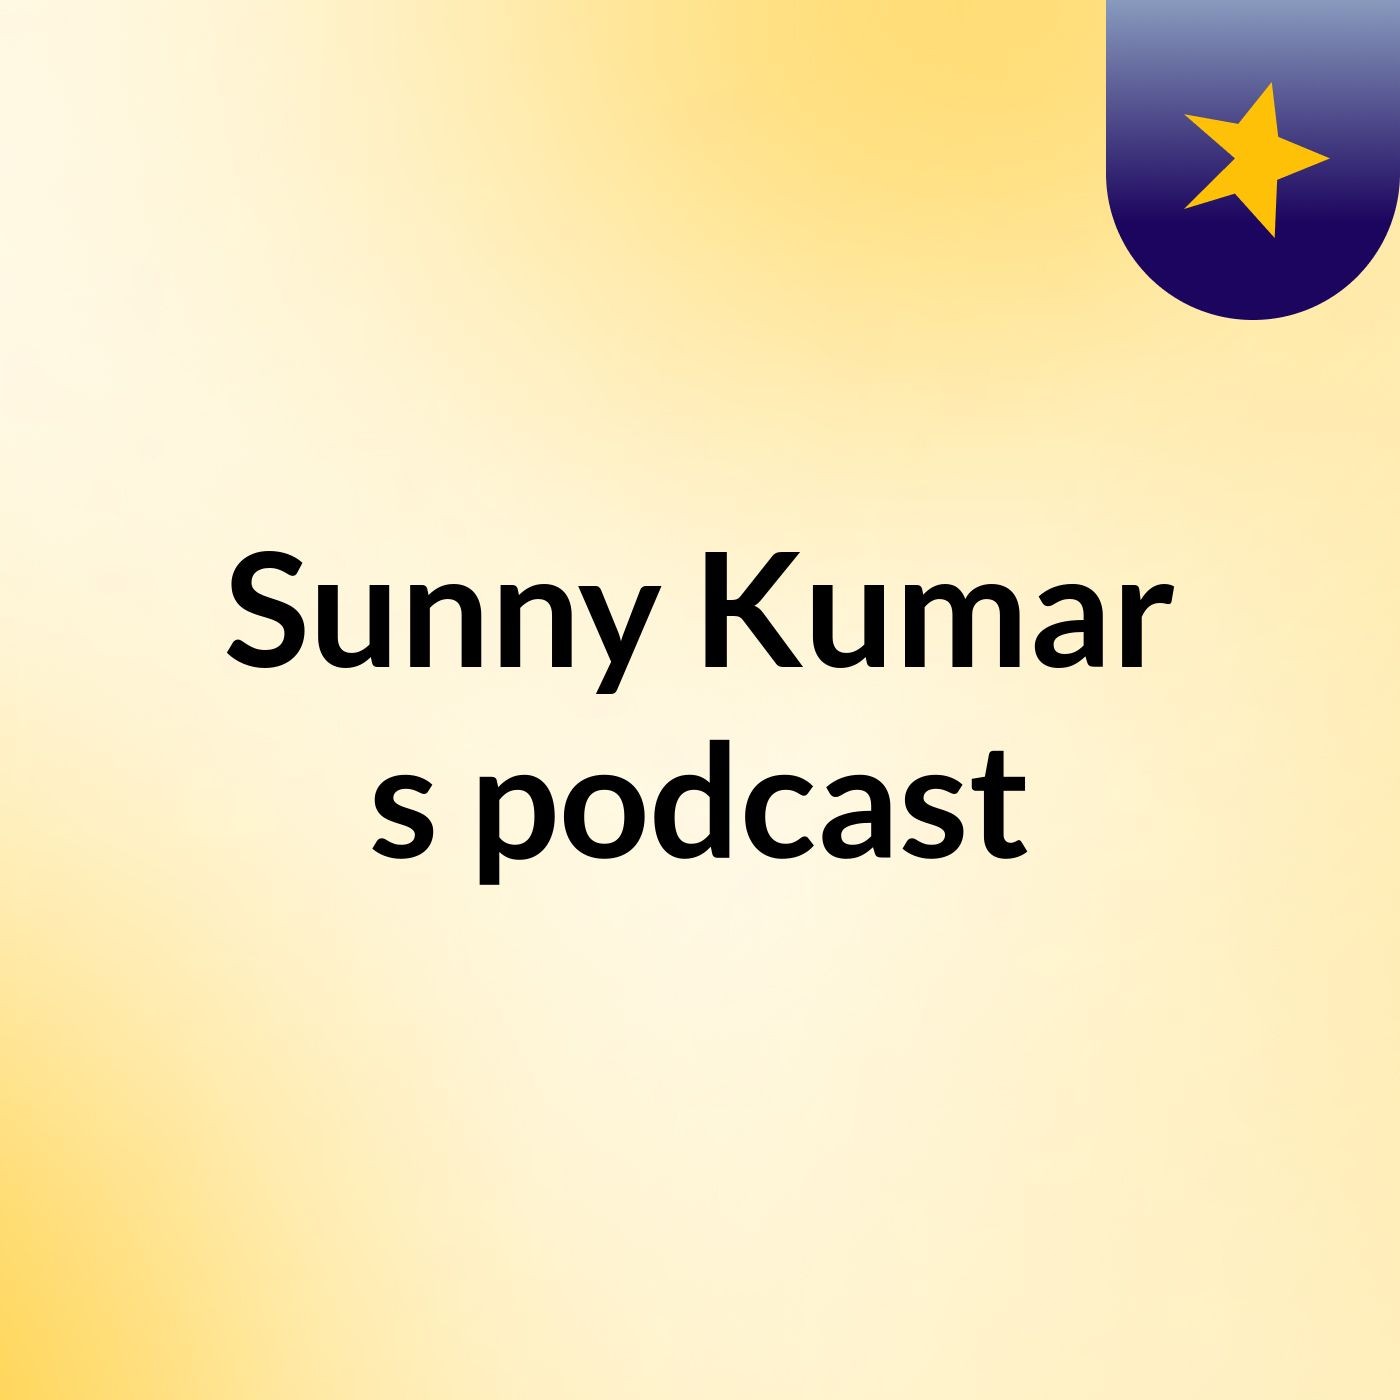 Episode 6 - Sunny Kumar's podcast